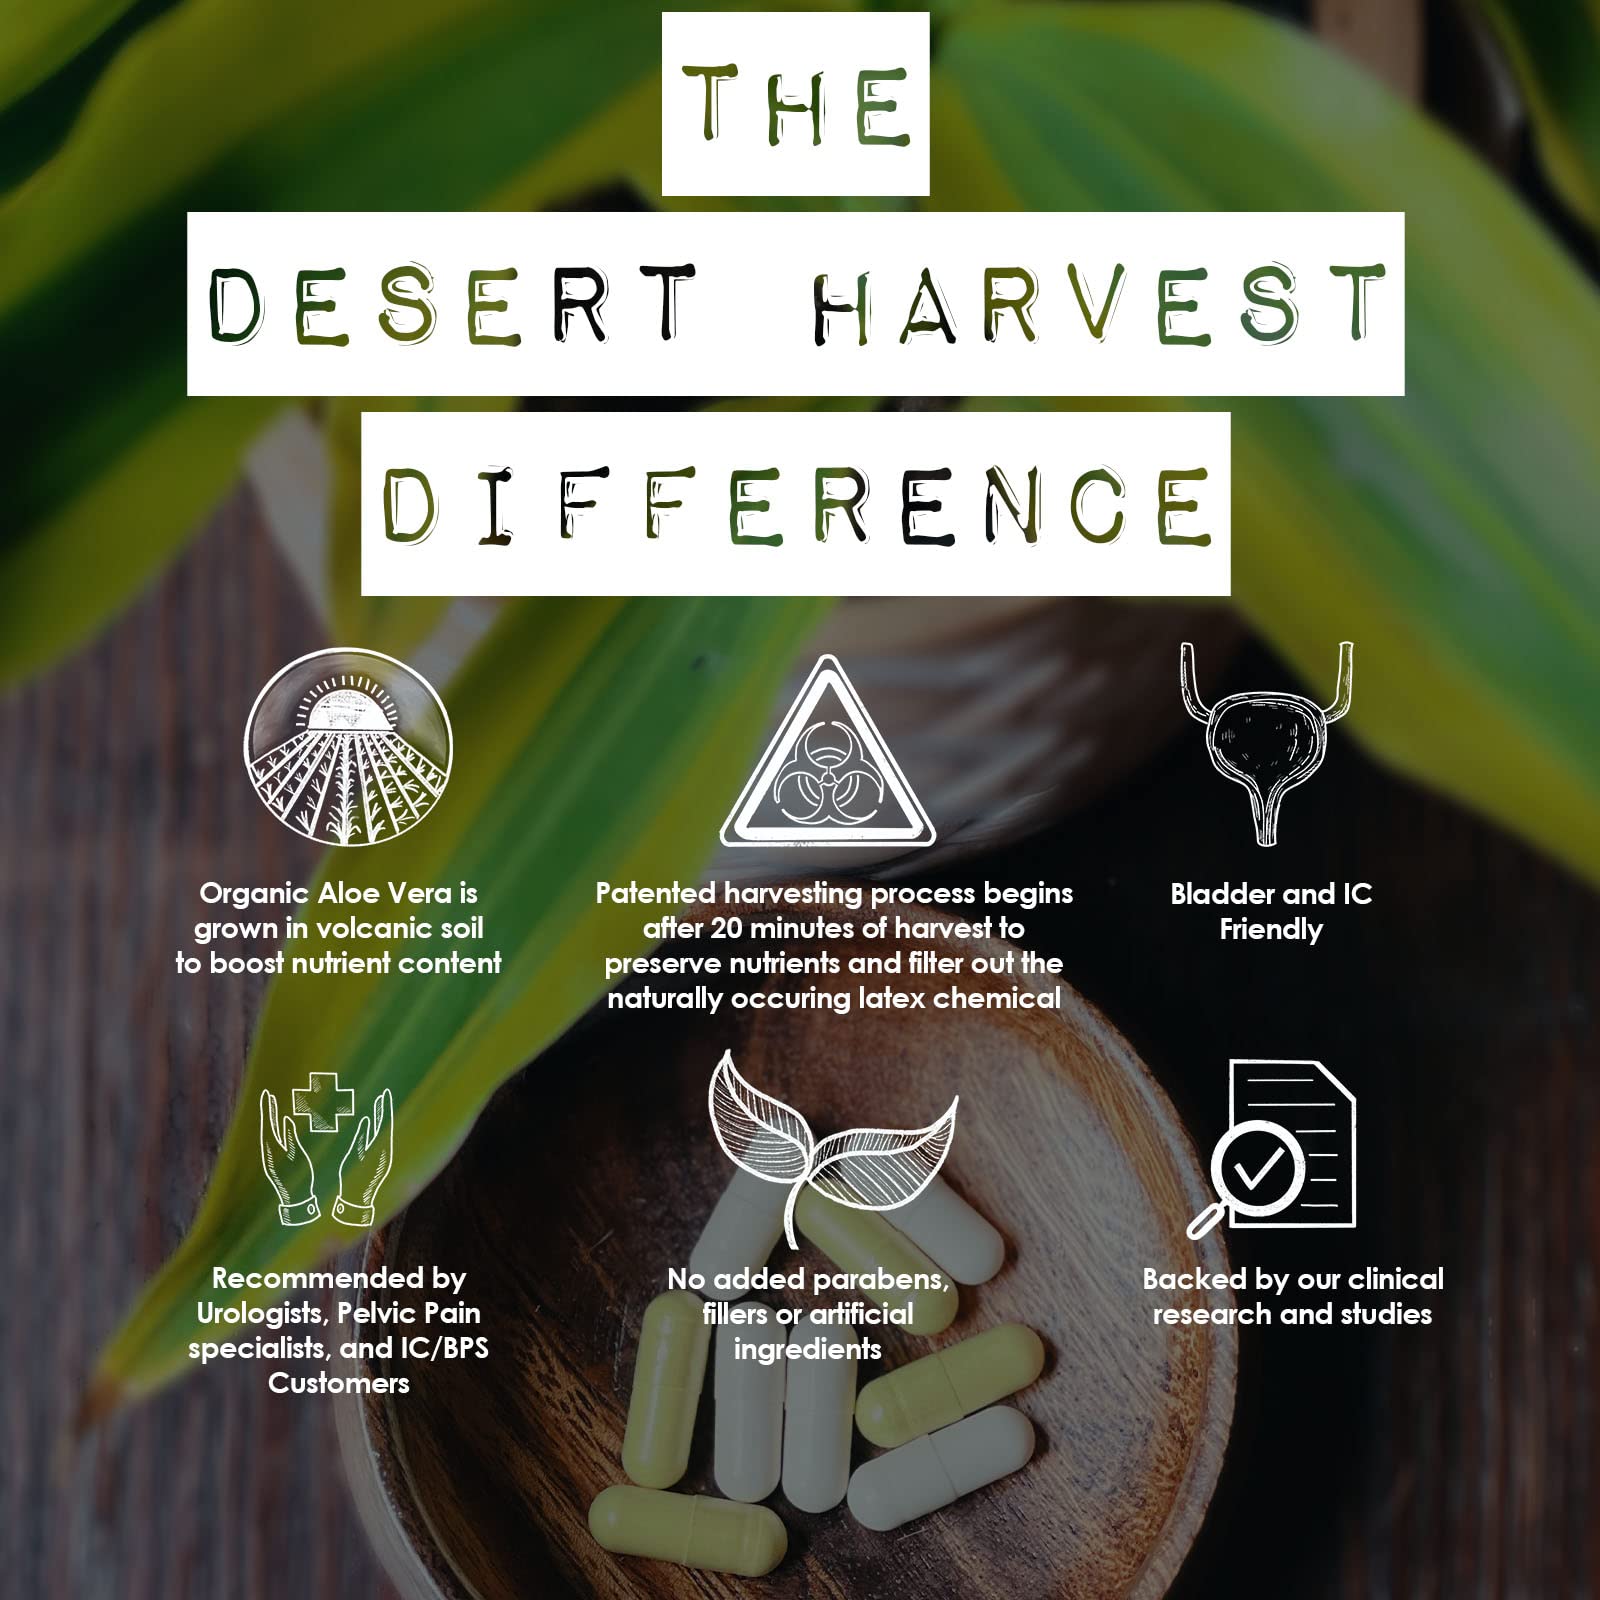 Desert Harvest Aloe Vera, 180 Capsules